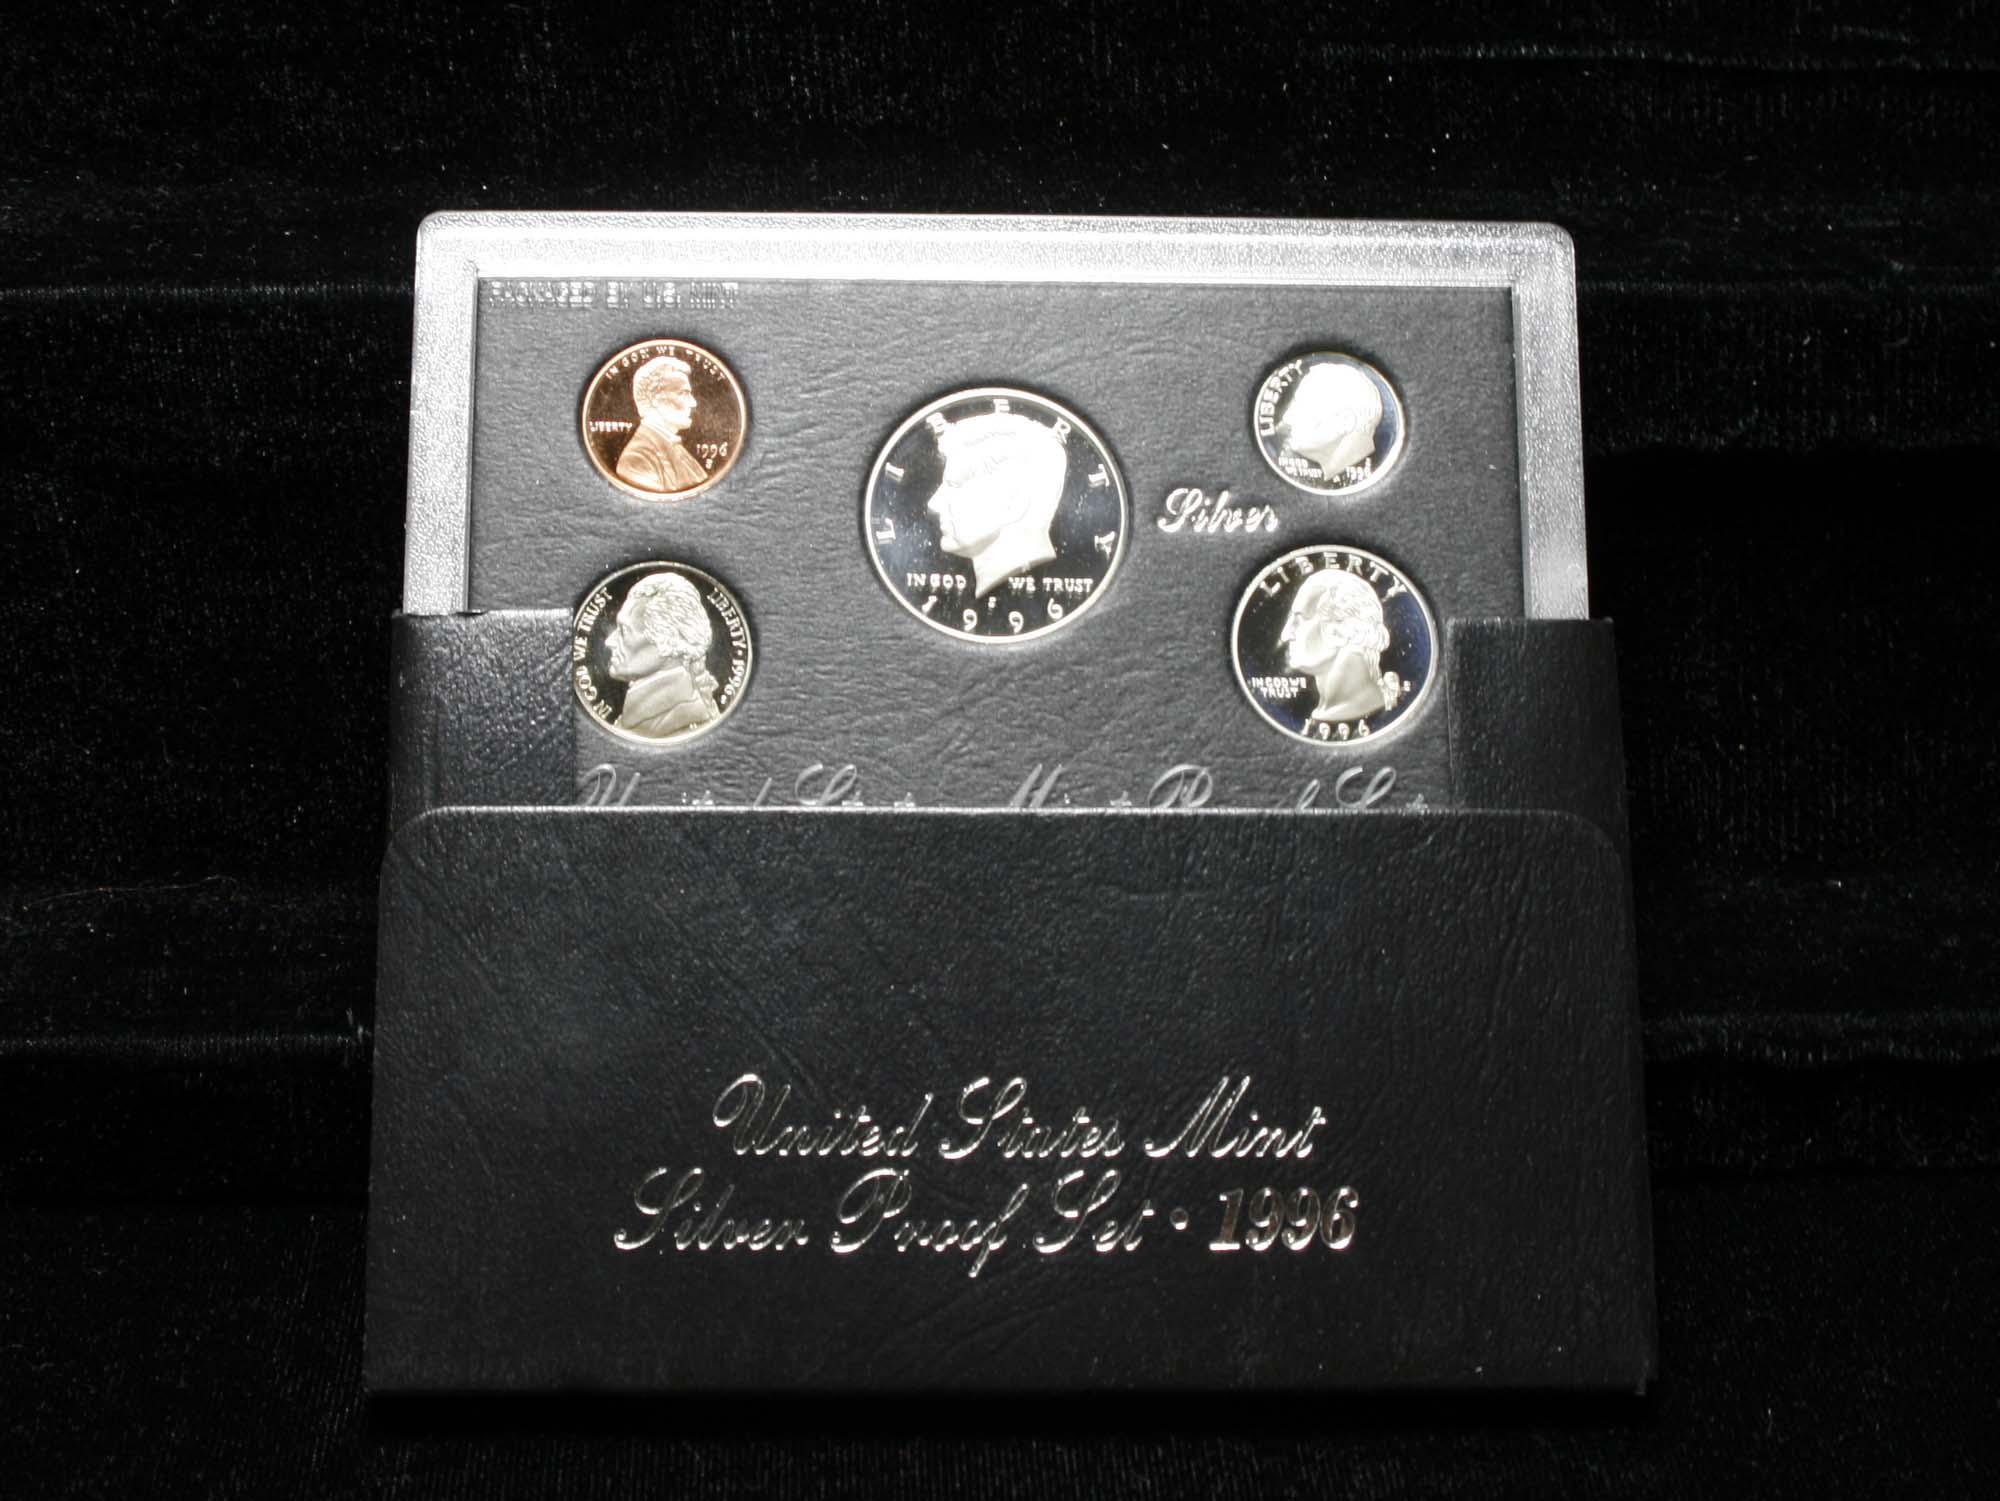 1996 United States Mint Silver Proof Set "Black Box"